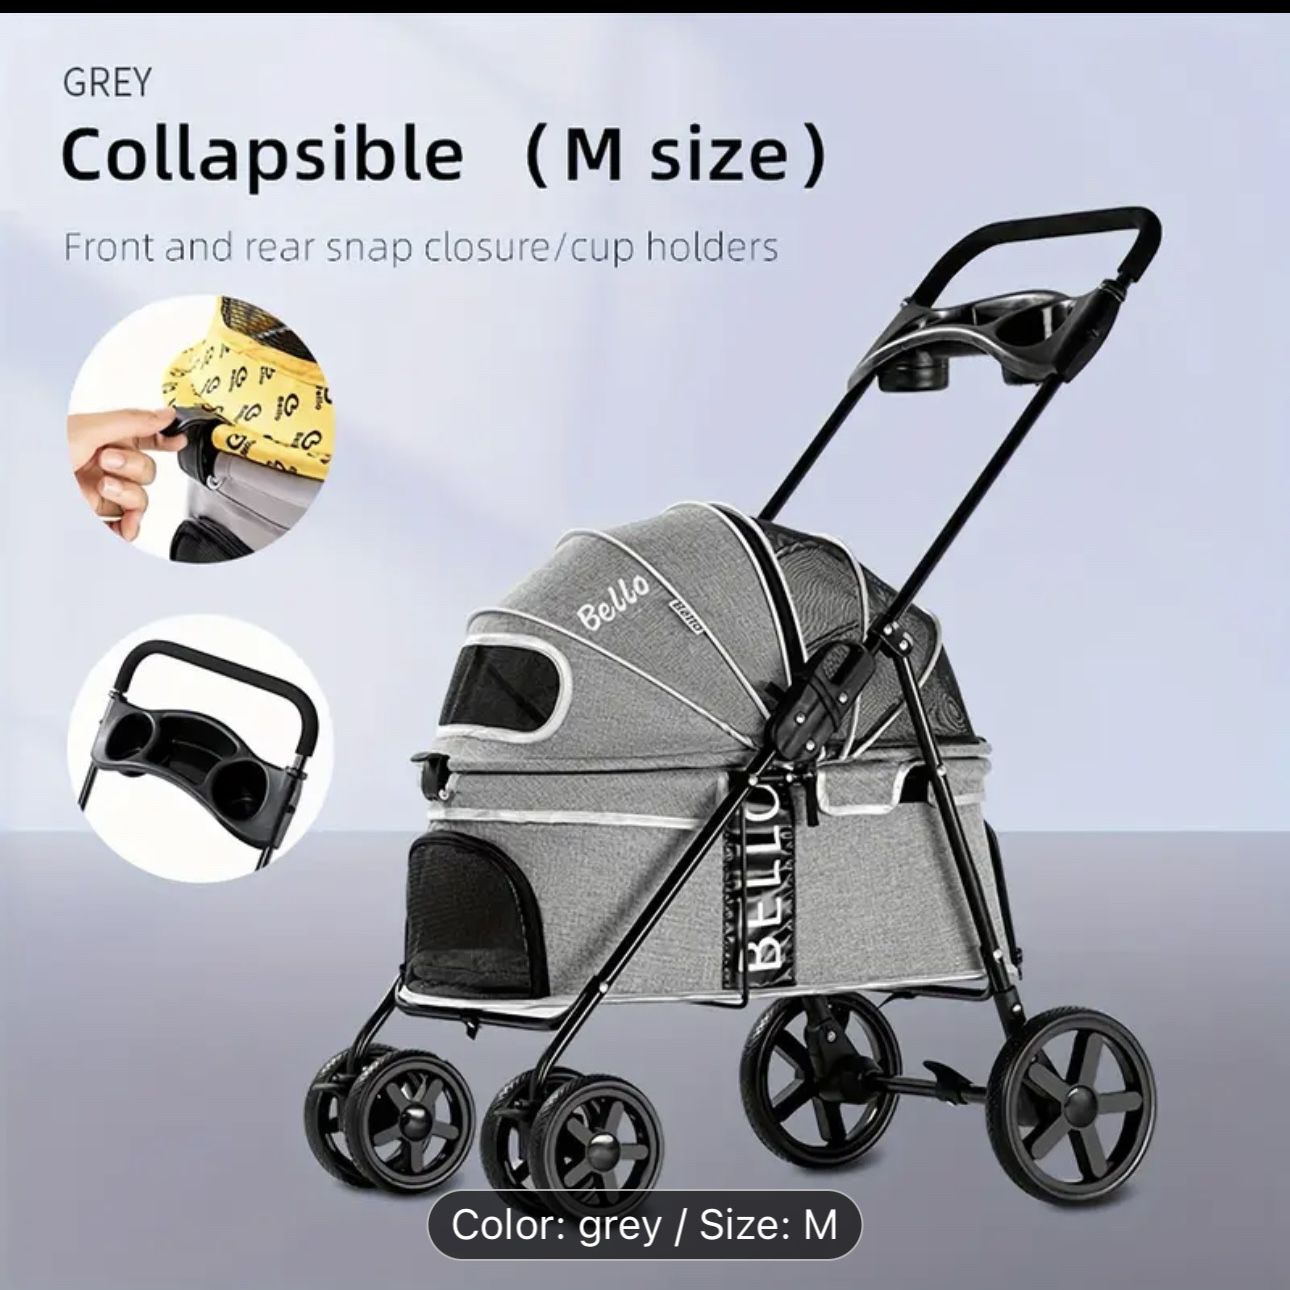 Pet Stroller, Folding Dog Stroller For Small And Medium Dogs, Foldable Dog Carrier, Lightweight Weatherproof Travel Carriage Jogging Stroller